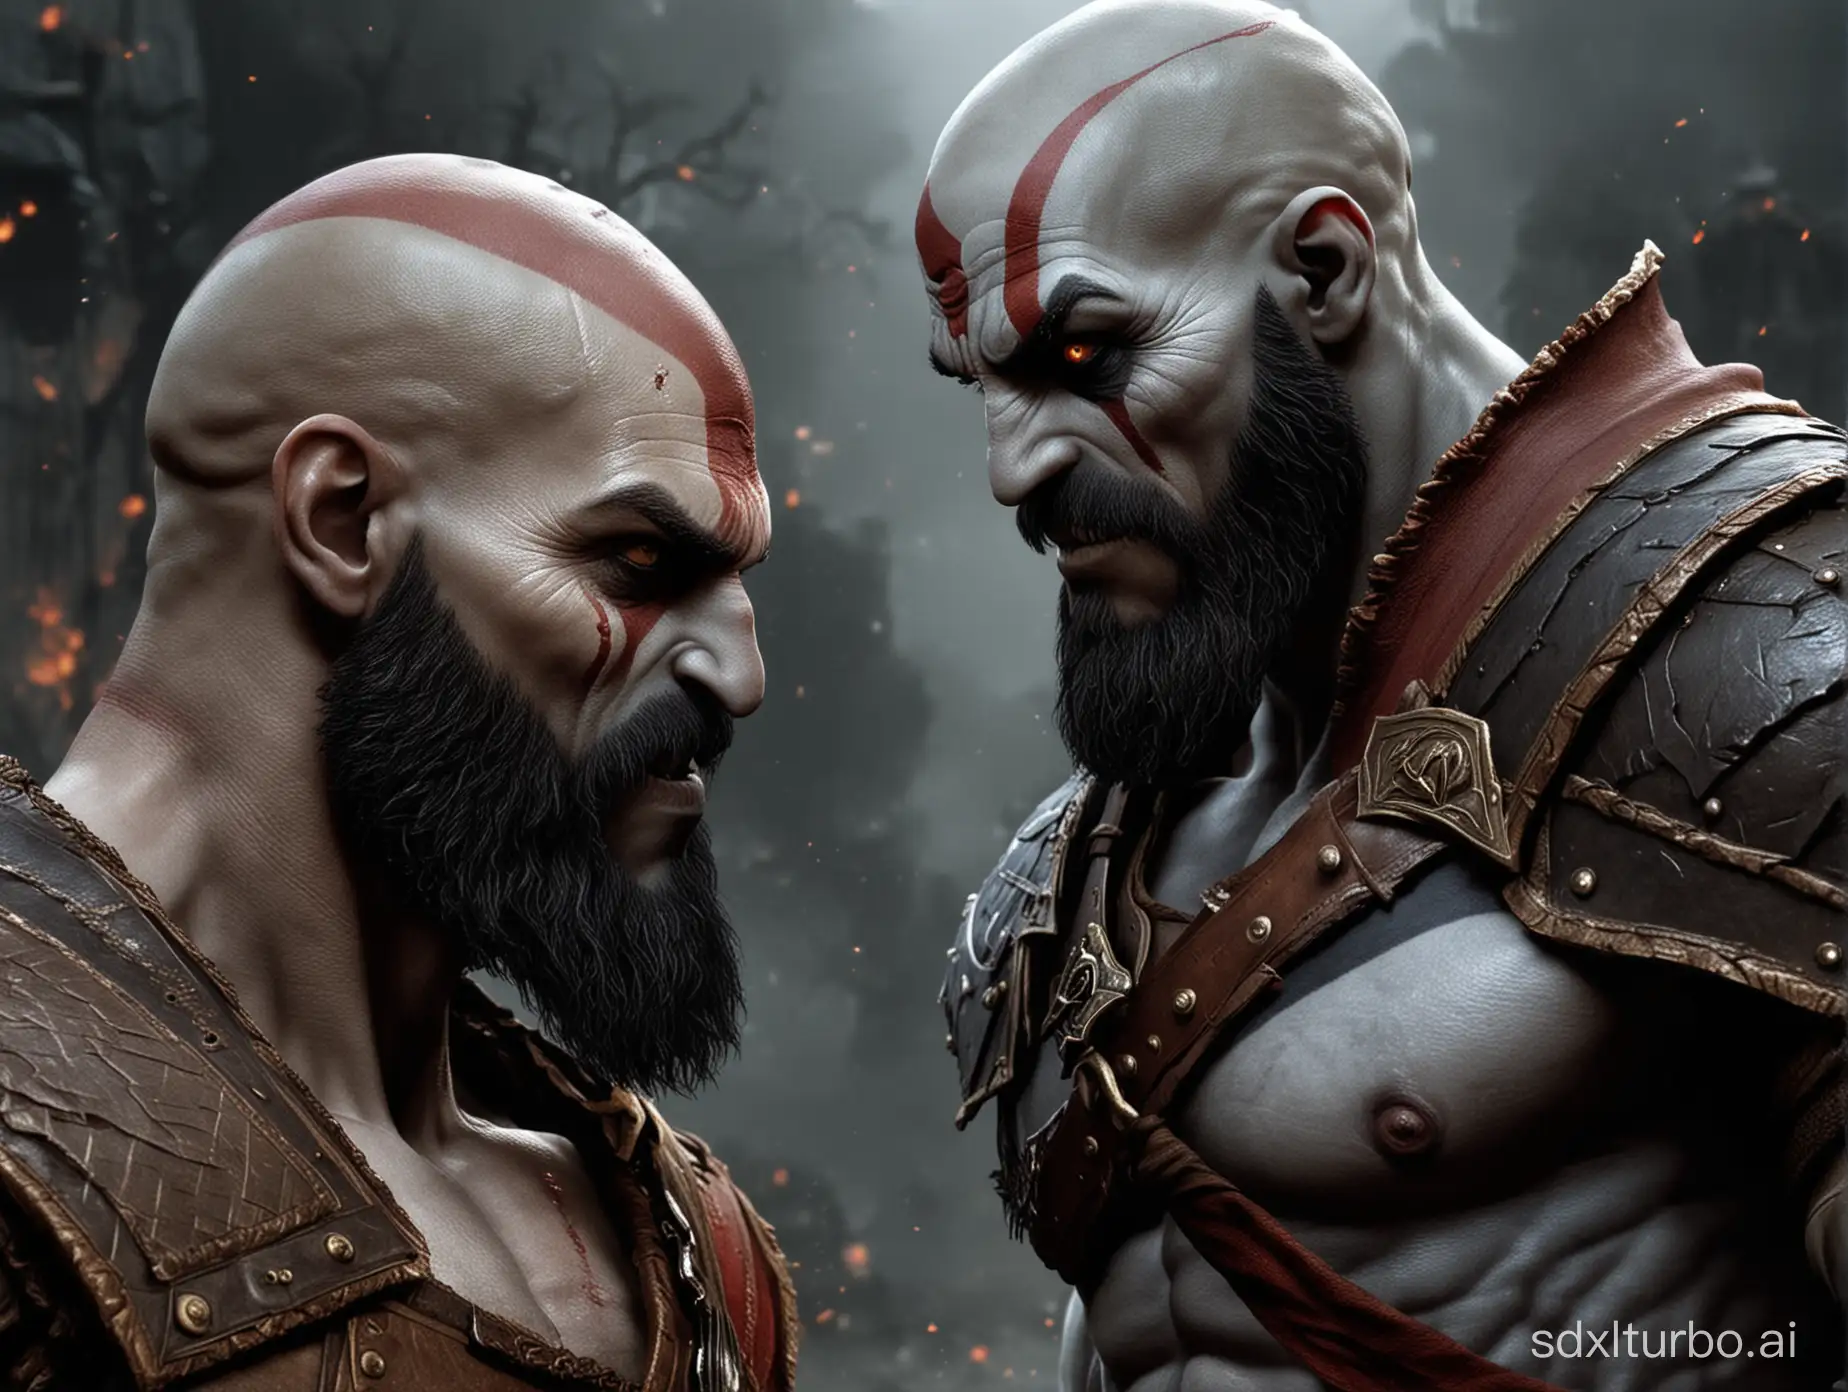 Kratos-the-God-of-War-Transformed-into-a-Demonic-Destroyer